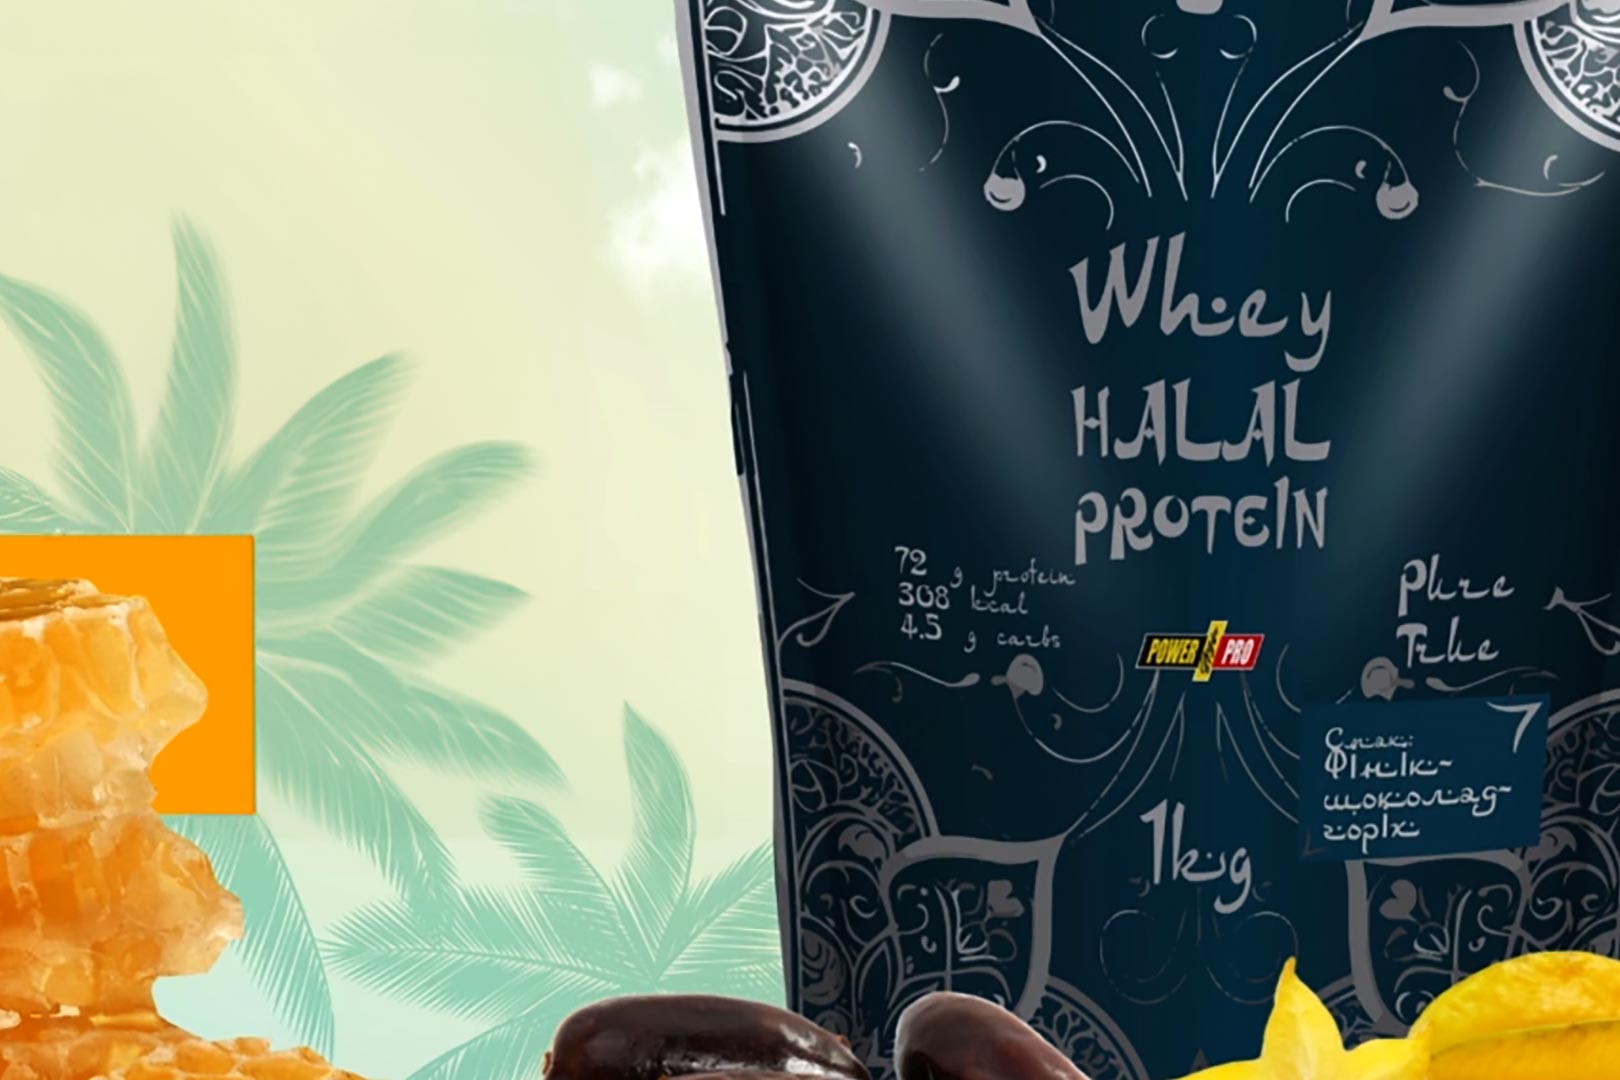 Power Pro Whey Halal Protein